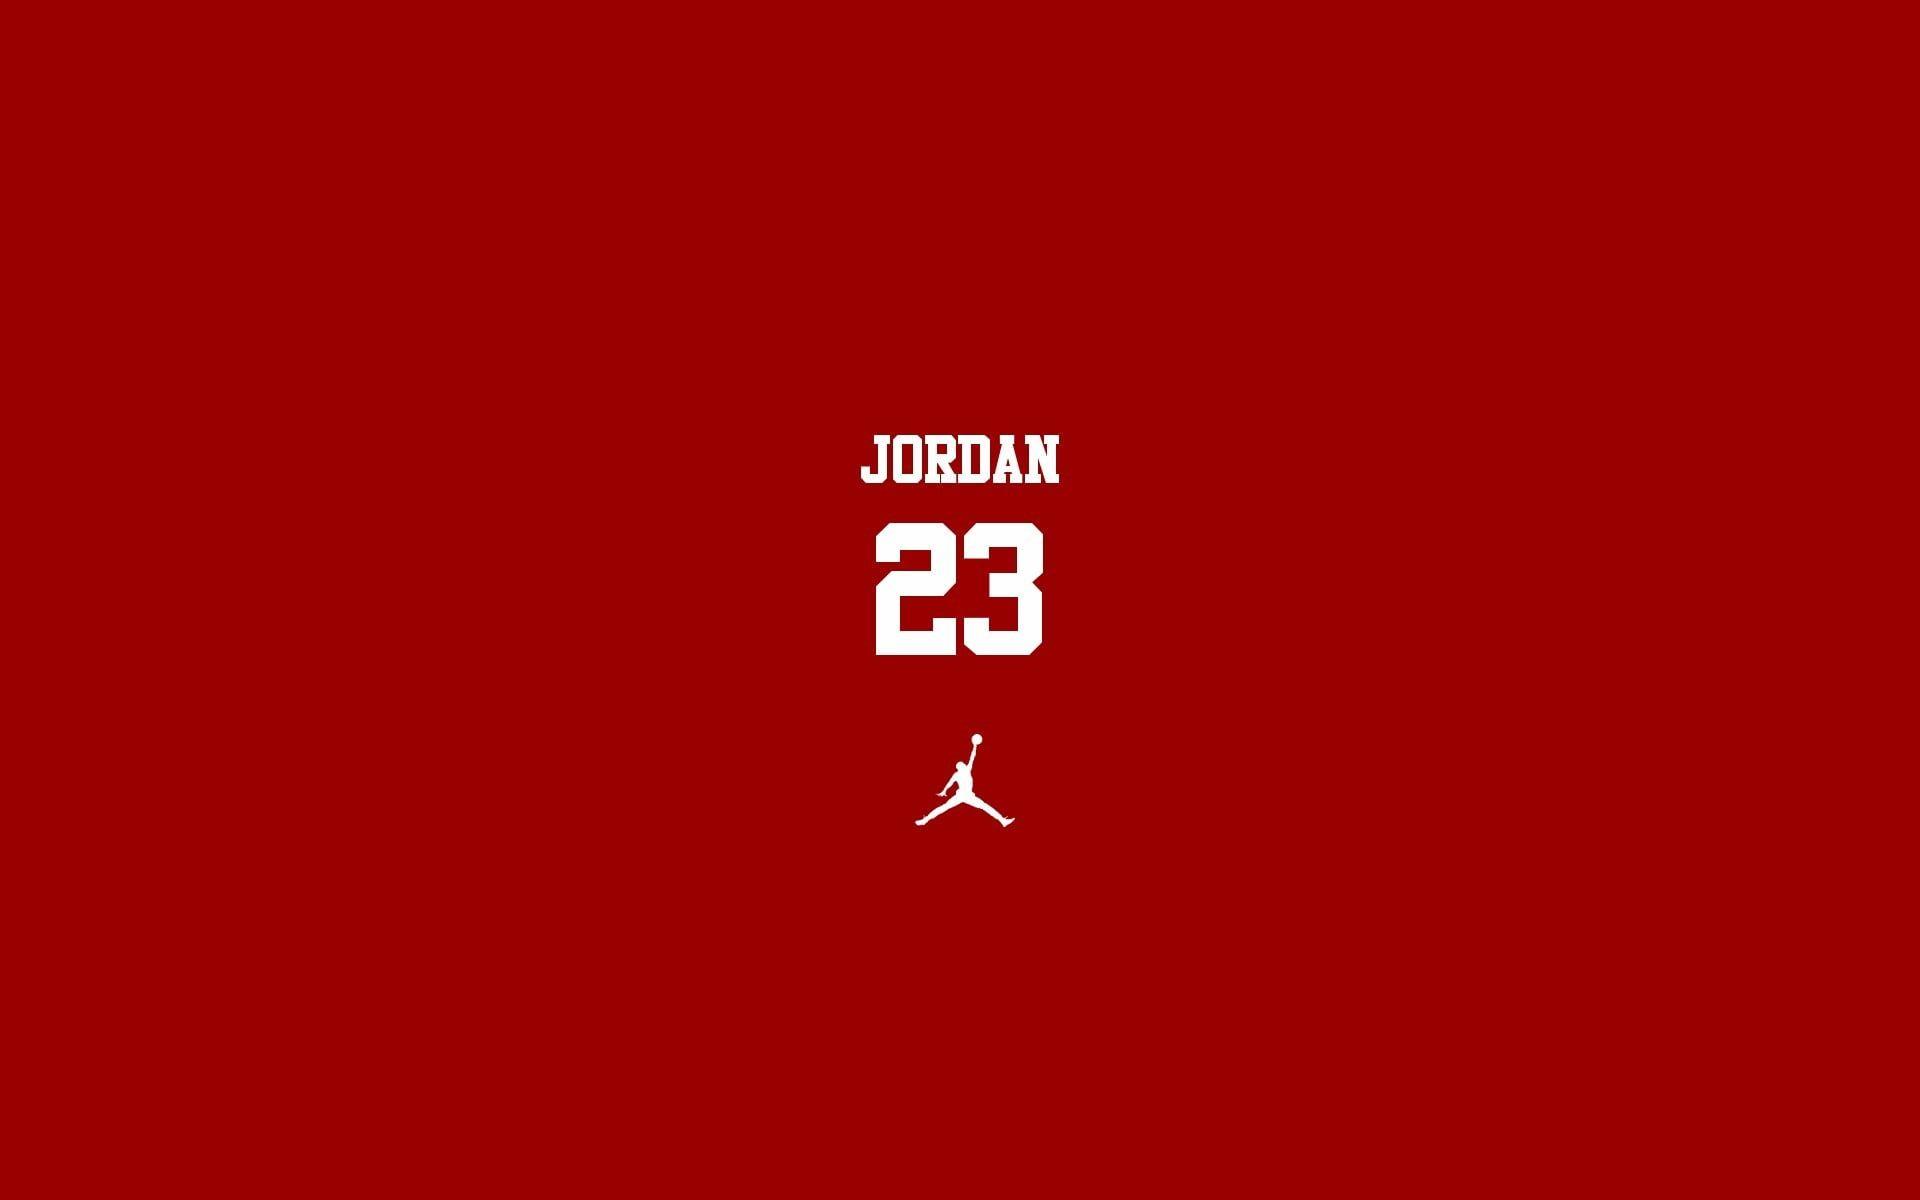 Nike Jordan Wallpaper Pictures  Download Free Images on Unsplash